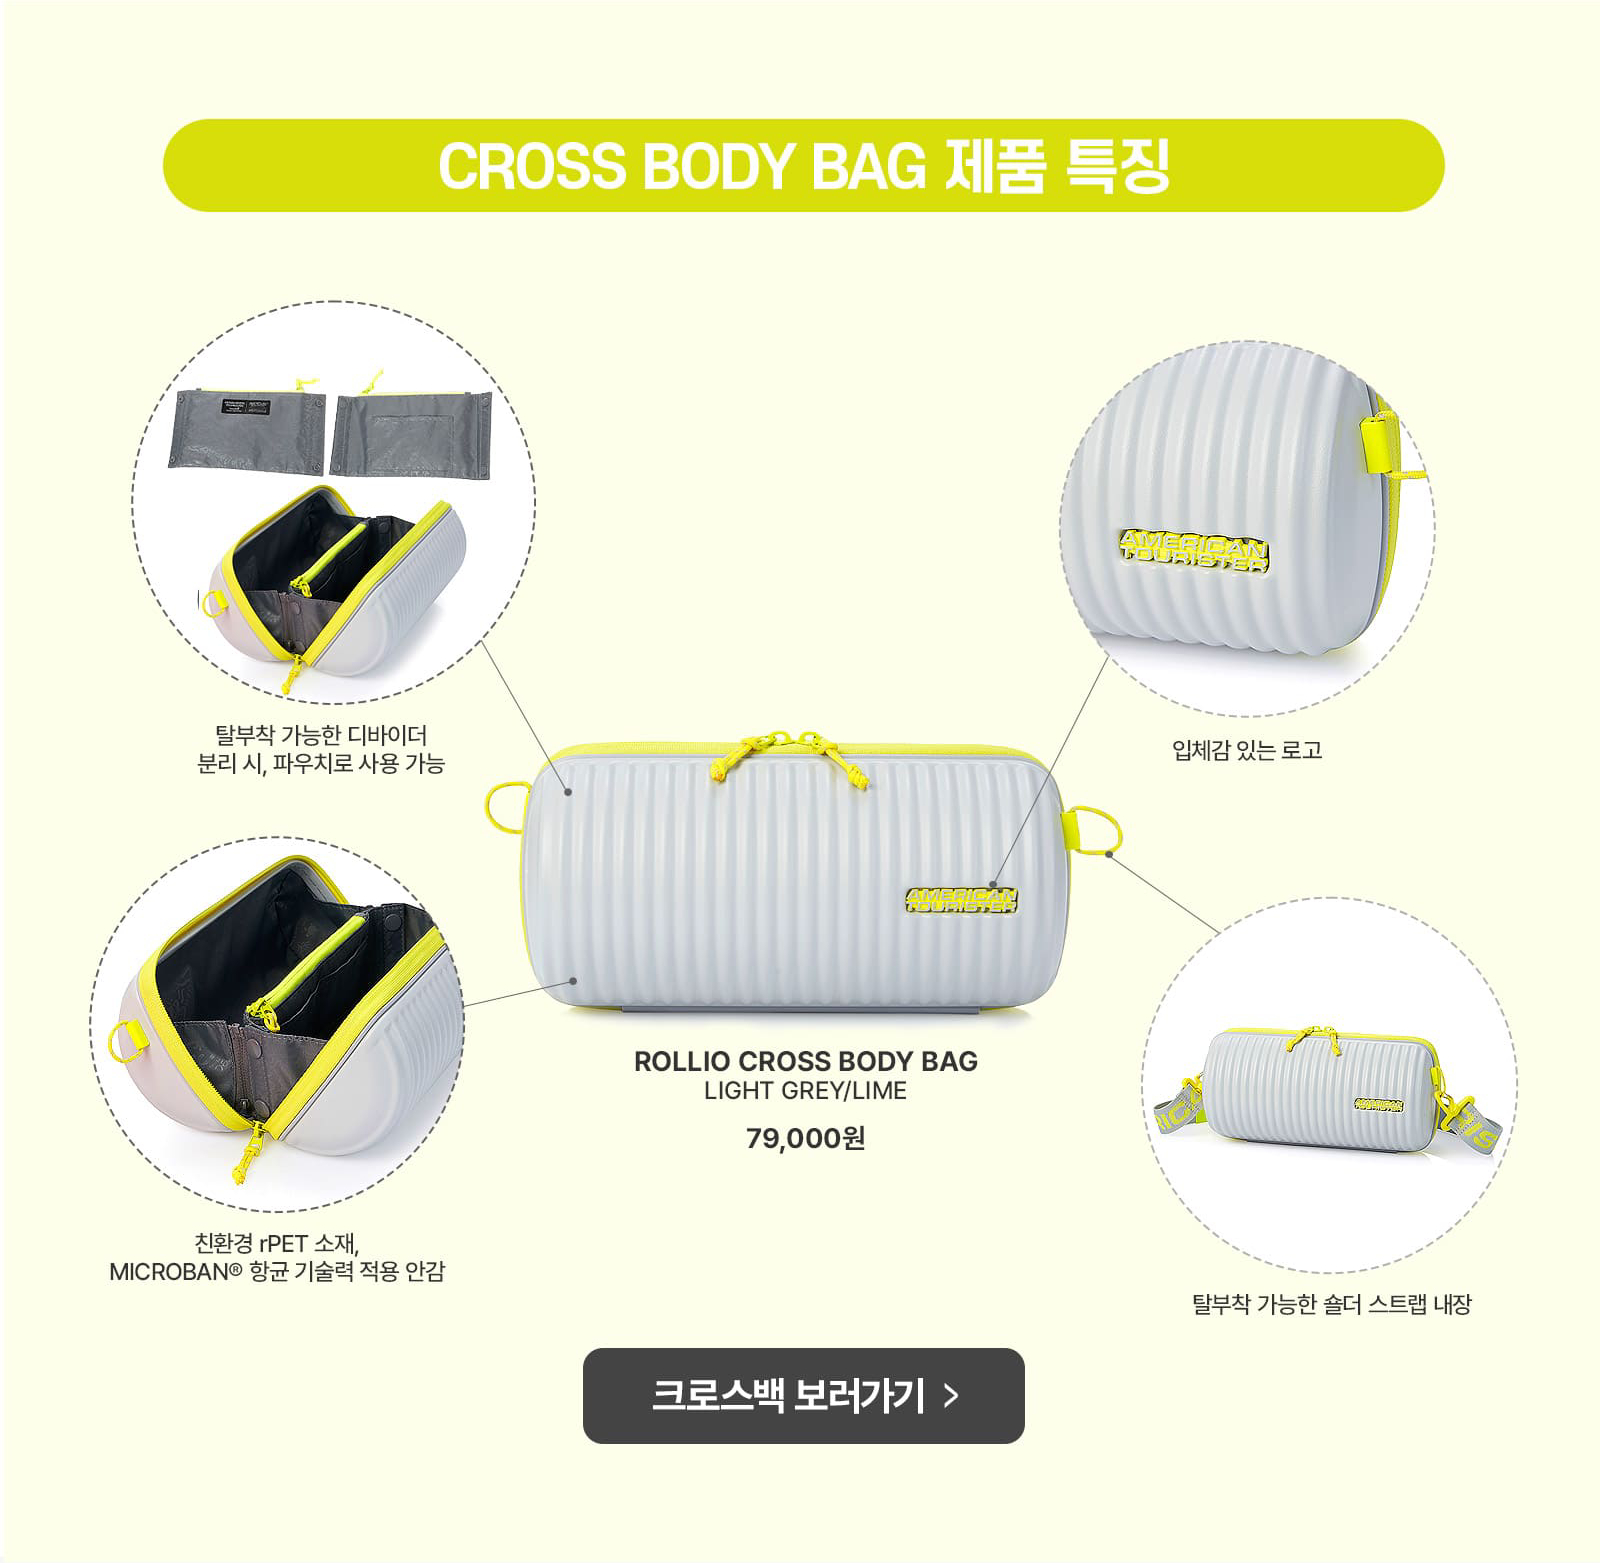 CROSS BODY BAG 제품 특징